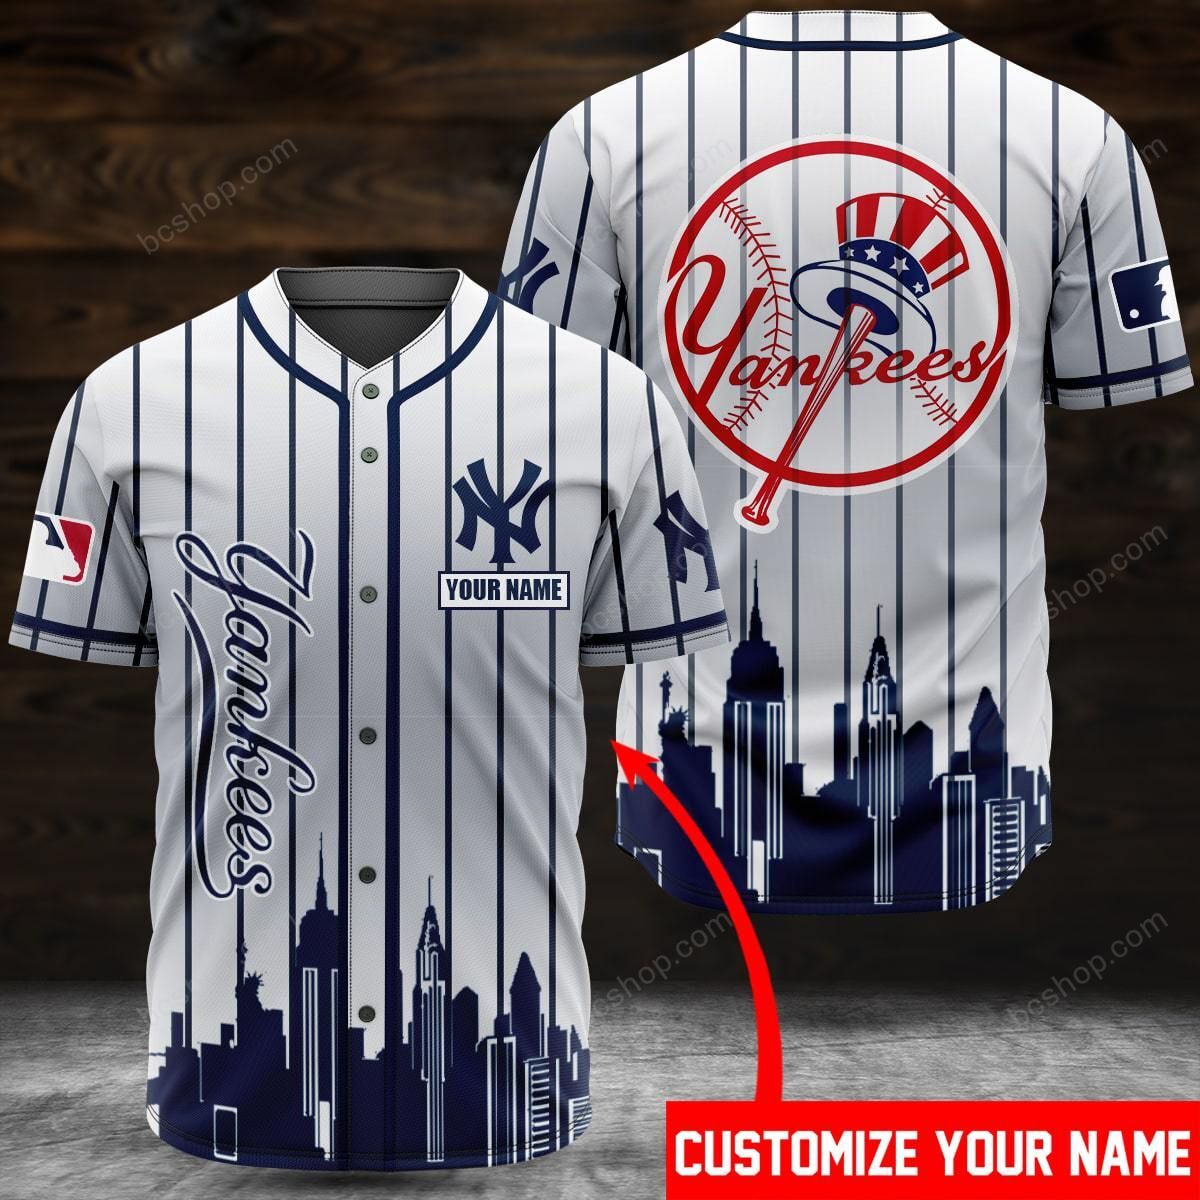 NYC Yankees custom name baseball jersey – LIMITED EDITION